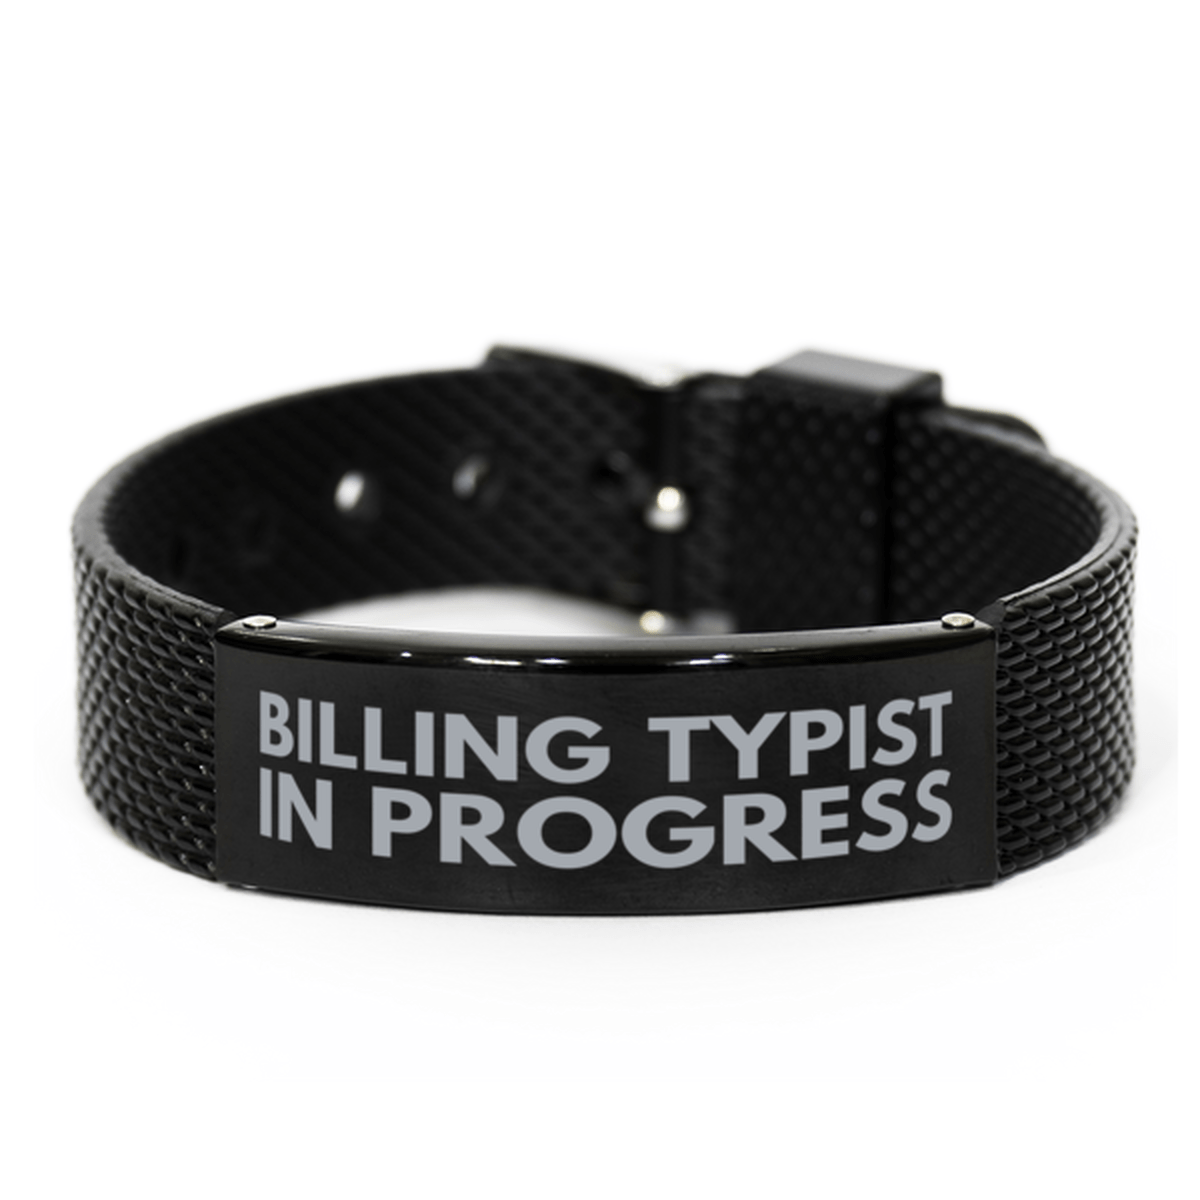 Inspirational Billing Typist Black Shark Mesh Bracelet, Billing Typist In Progress, Best Graduation Gifts for Students